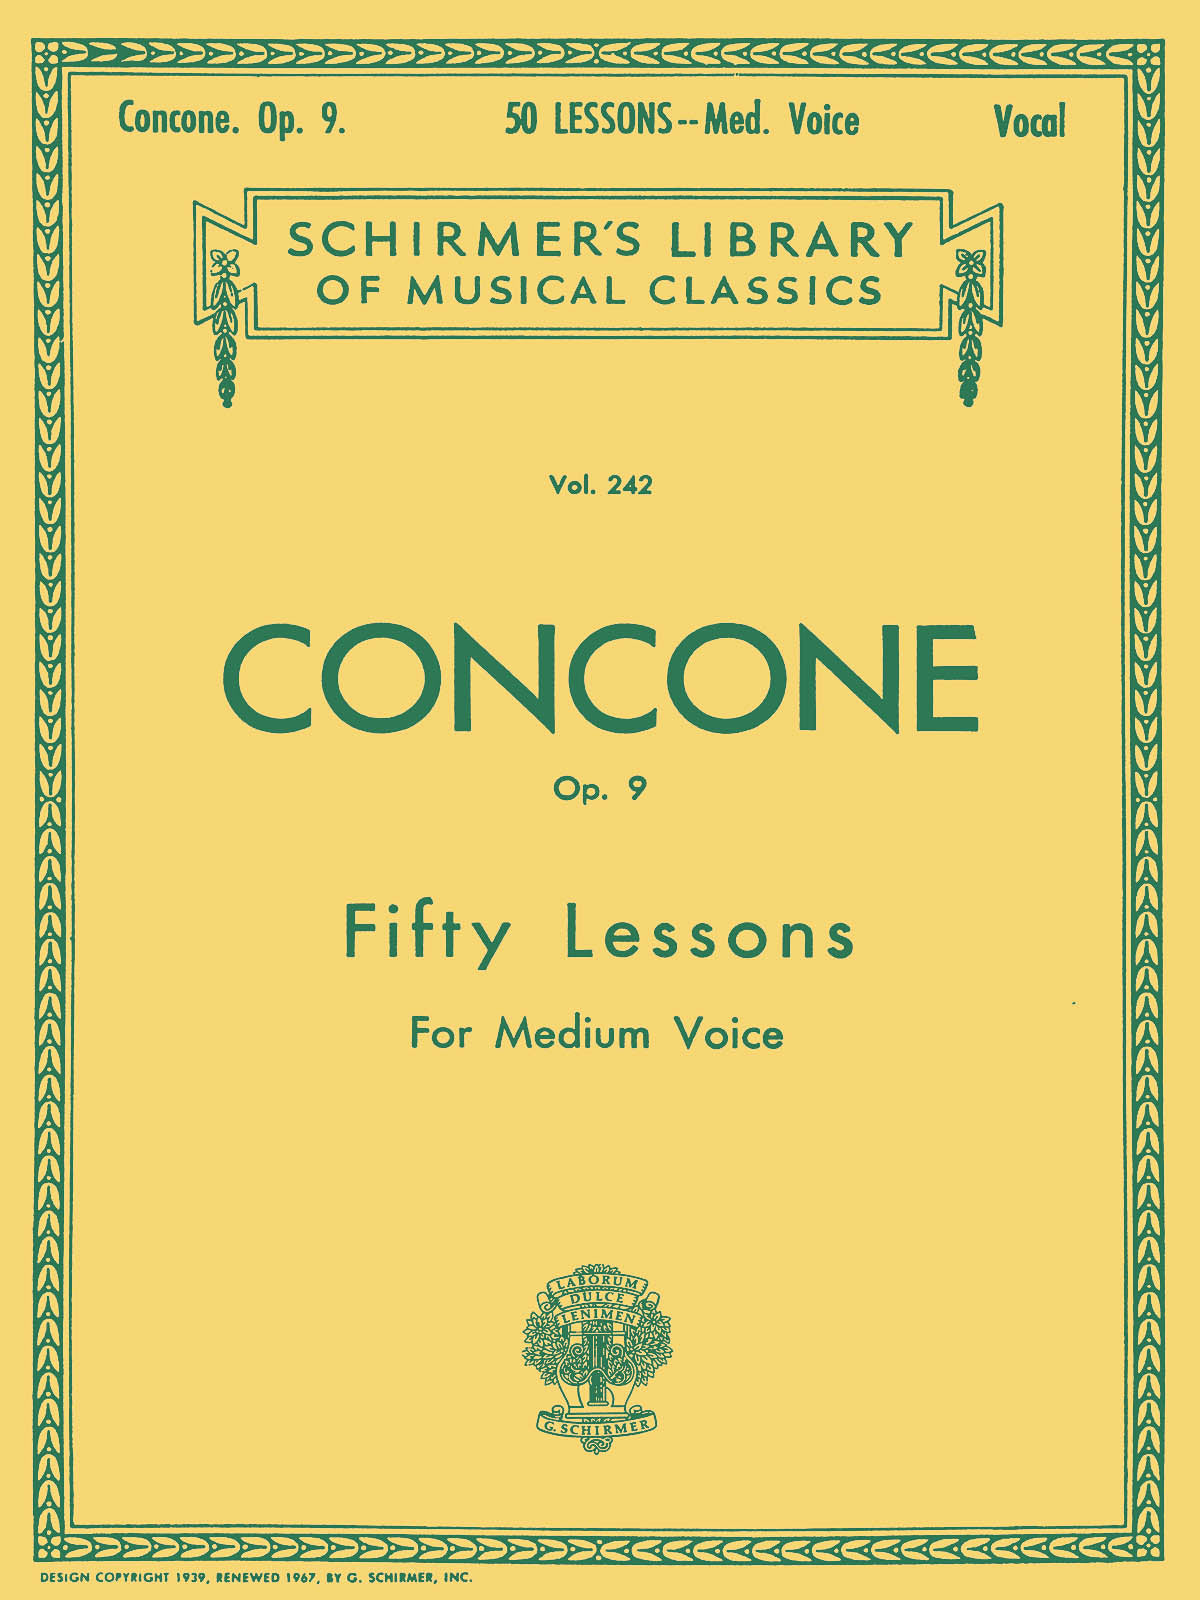 Concone 50 Lessons, Op. 9 For Medium Voice